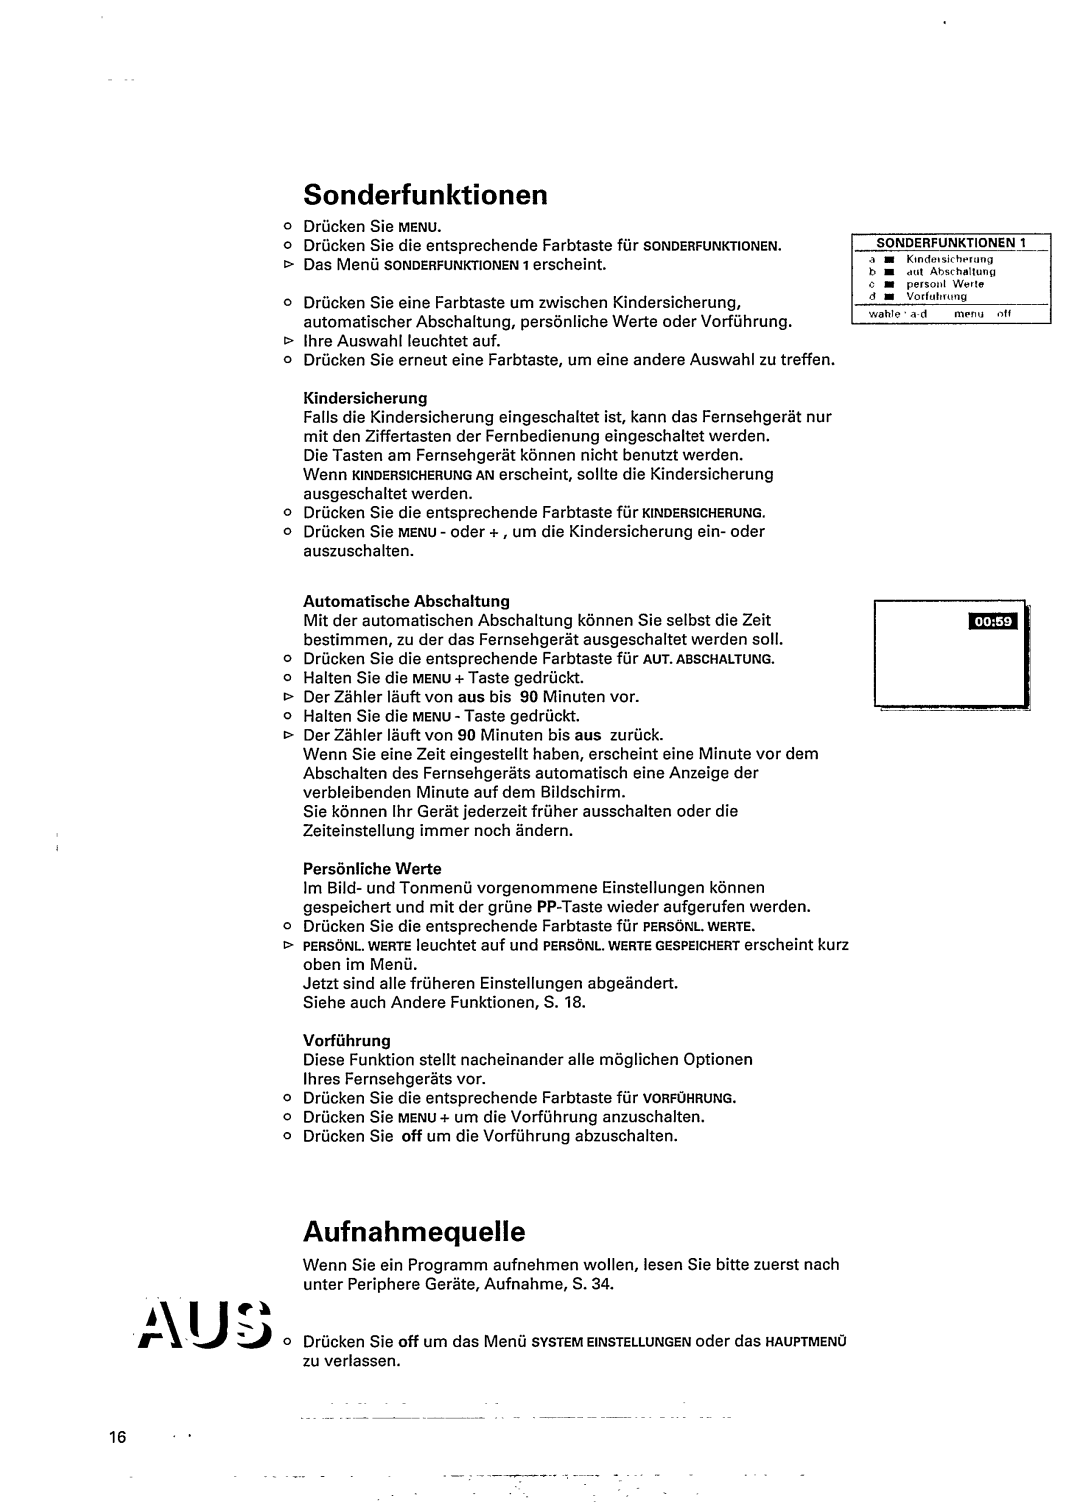 Philips 25PT825B manual 